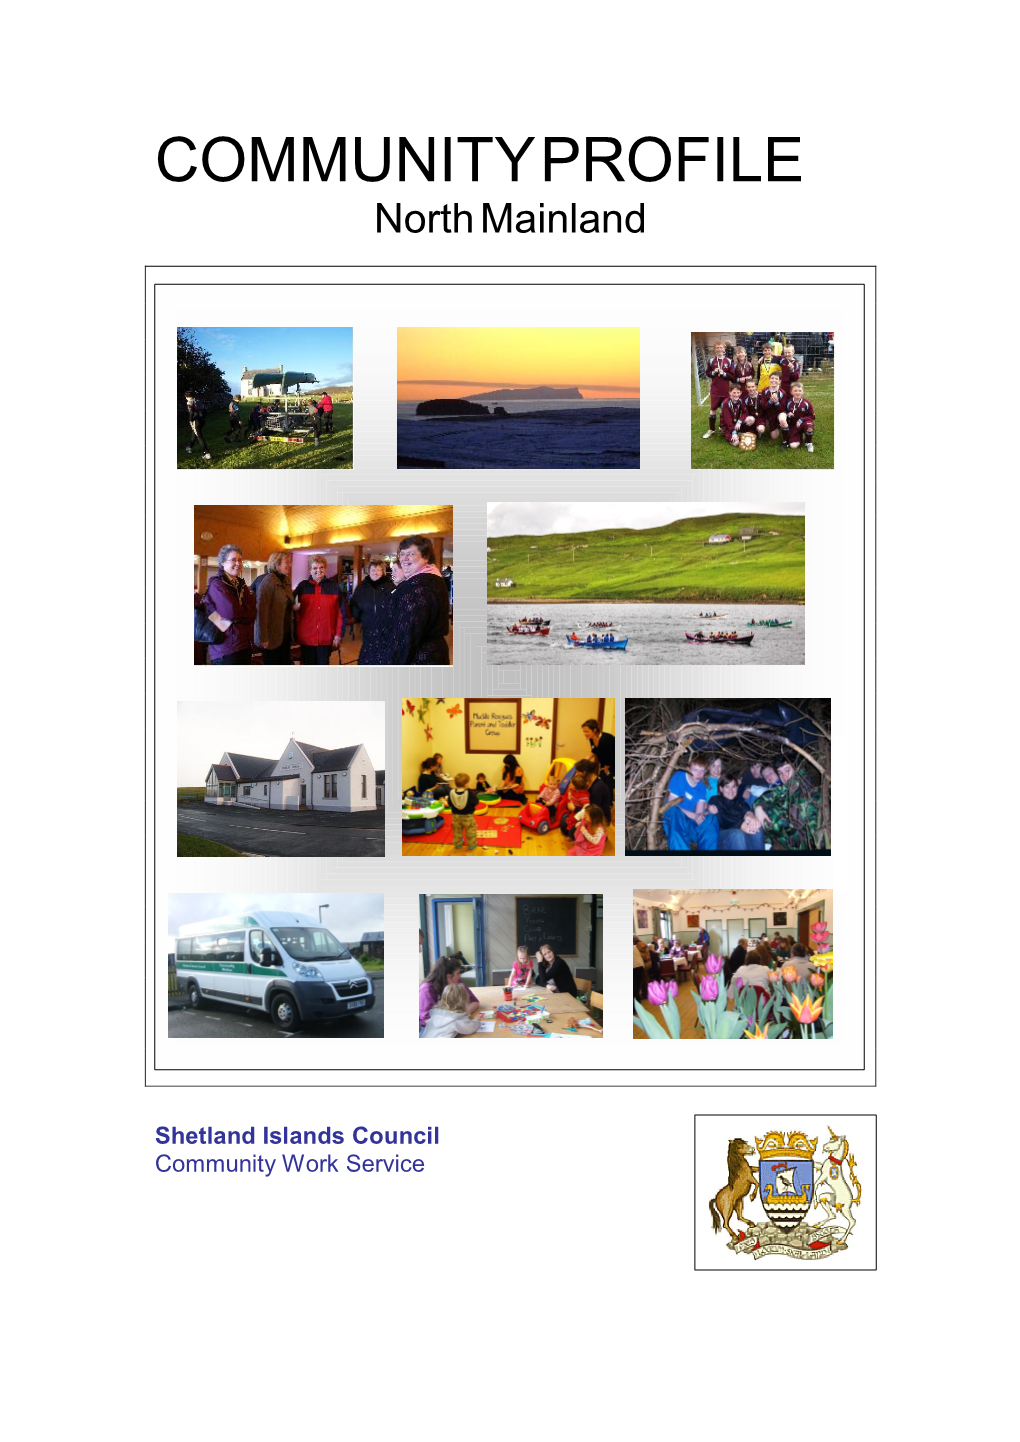 Download: North Mainland Community Profile